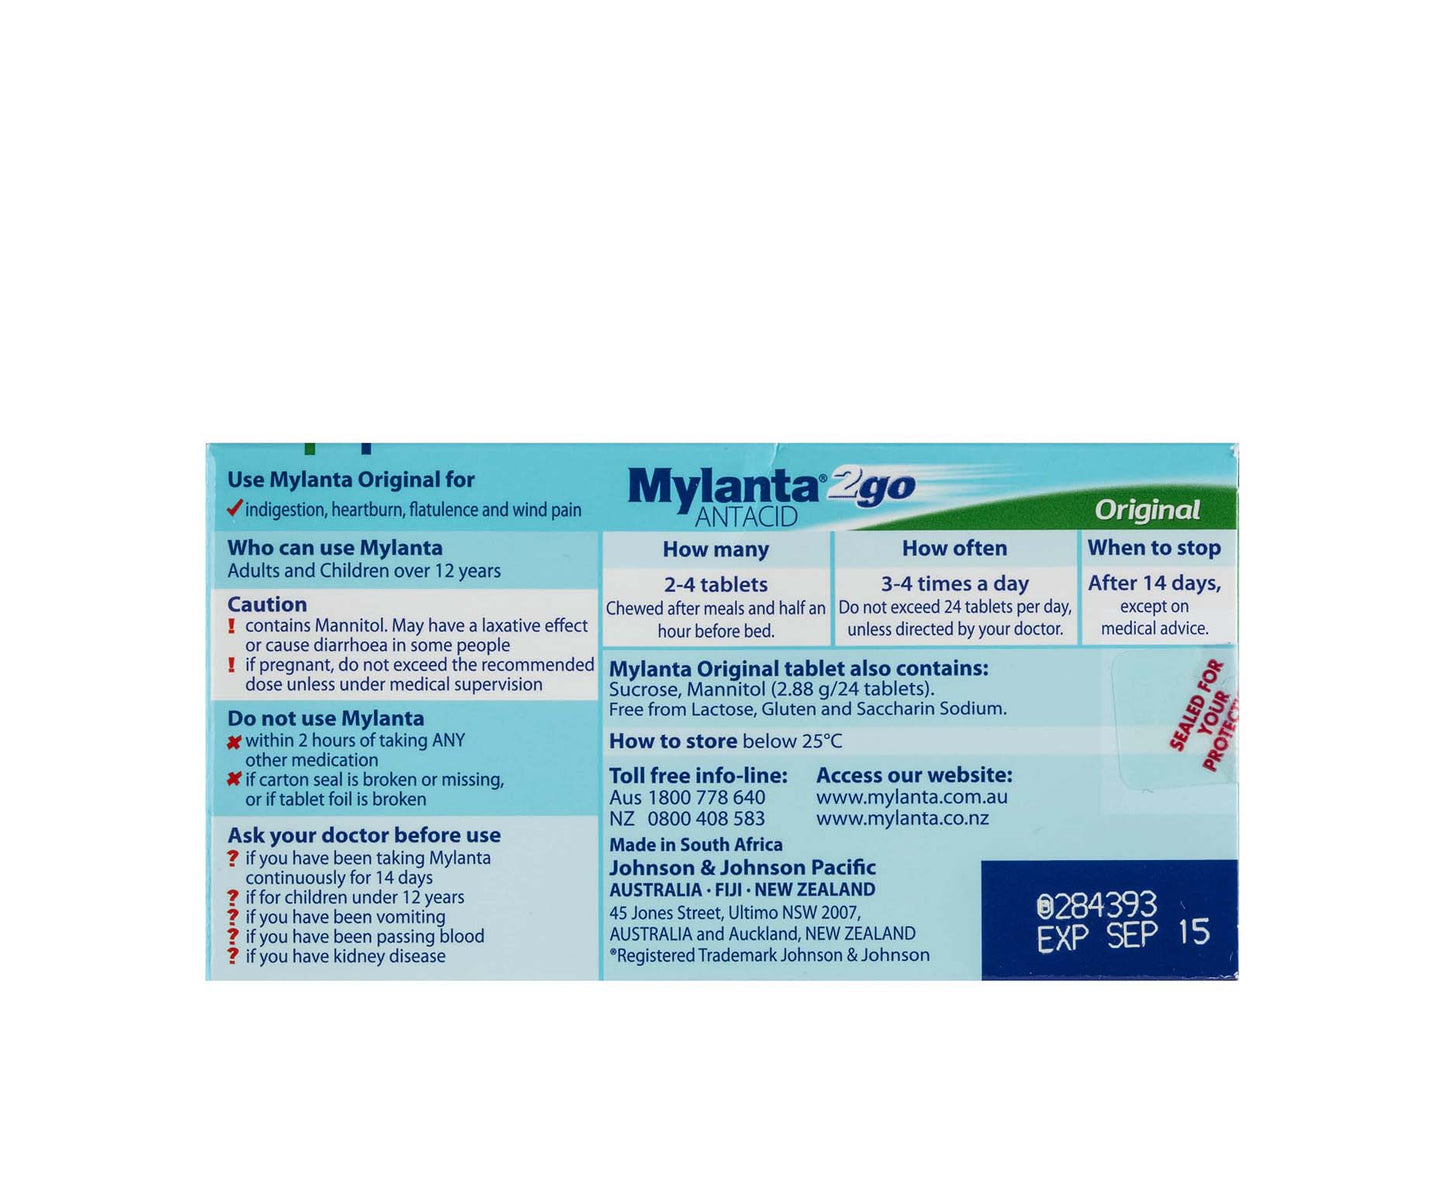 Mylanta 2Go Original Chewable Tablets 24